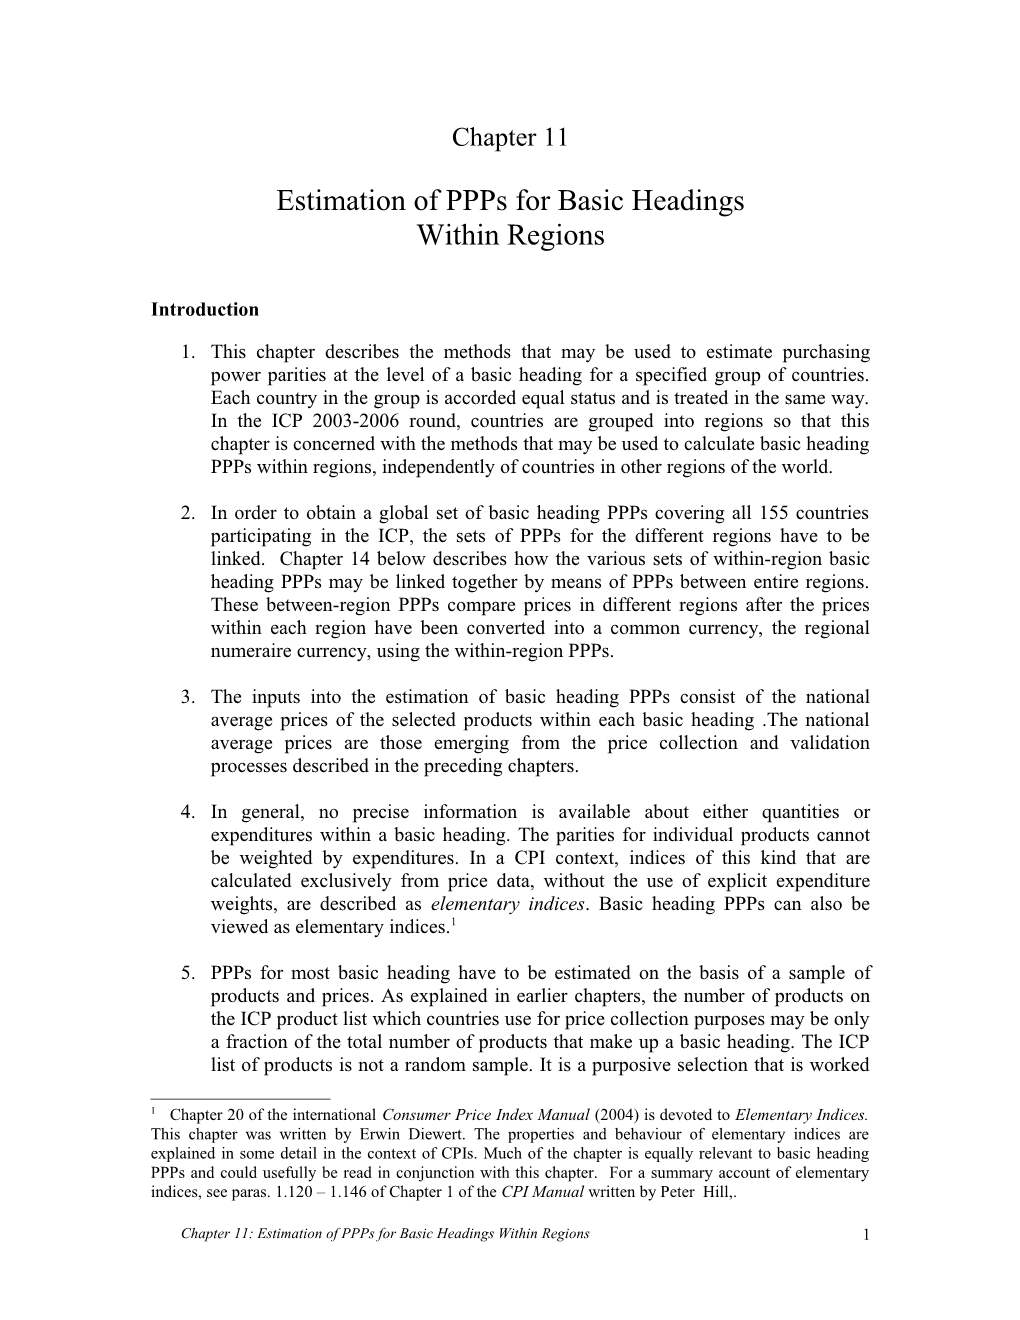 Estimation of Ppps for Basic Headings